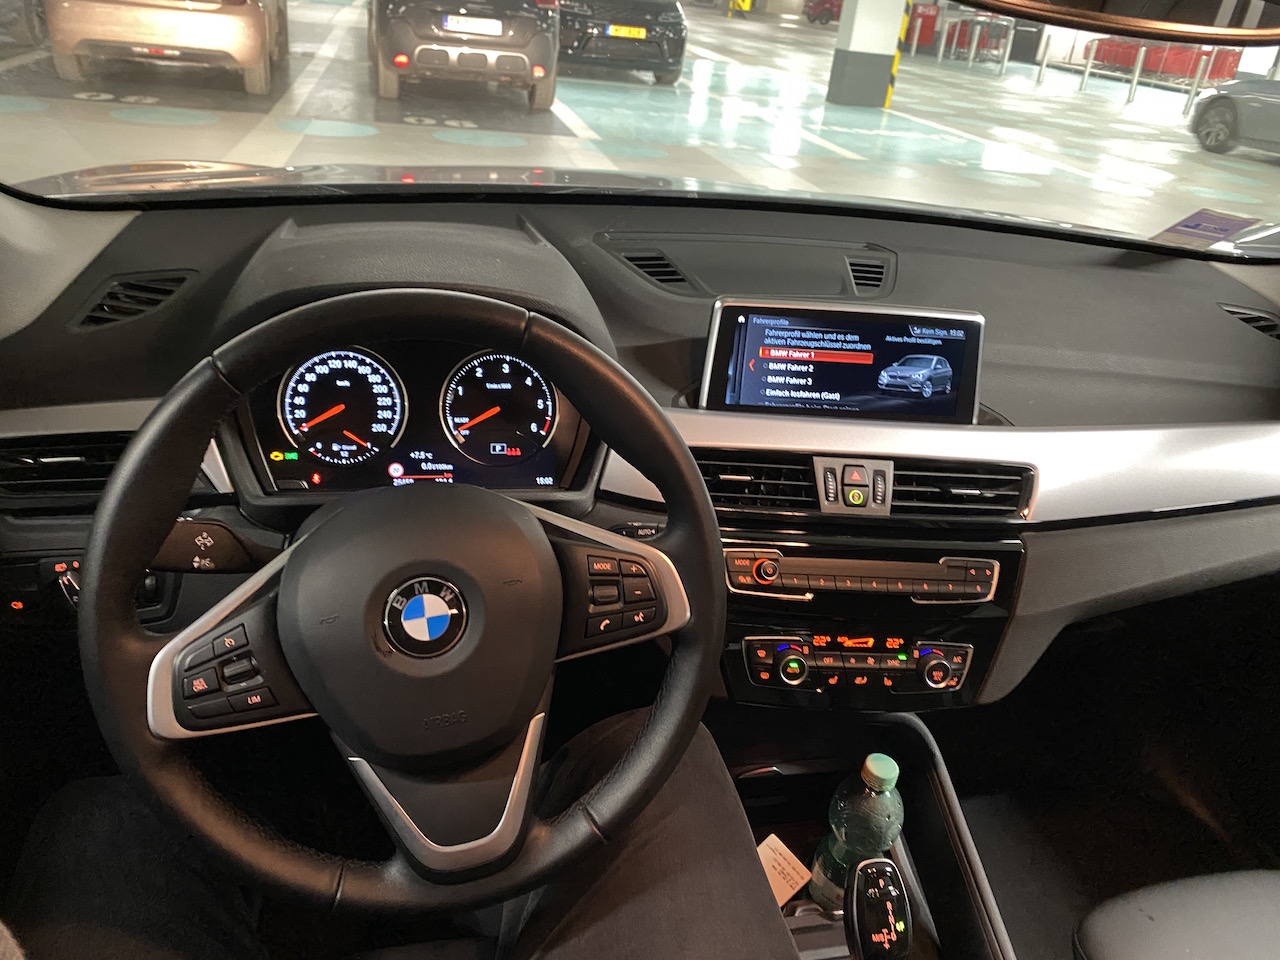 BMW X1 Innenraum.JPG